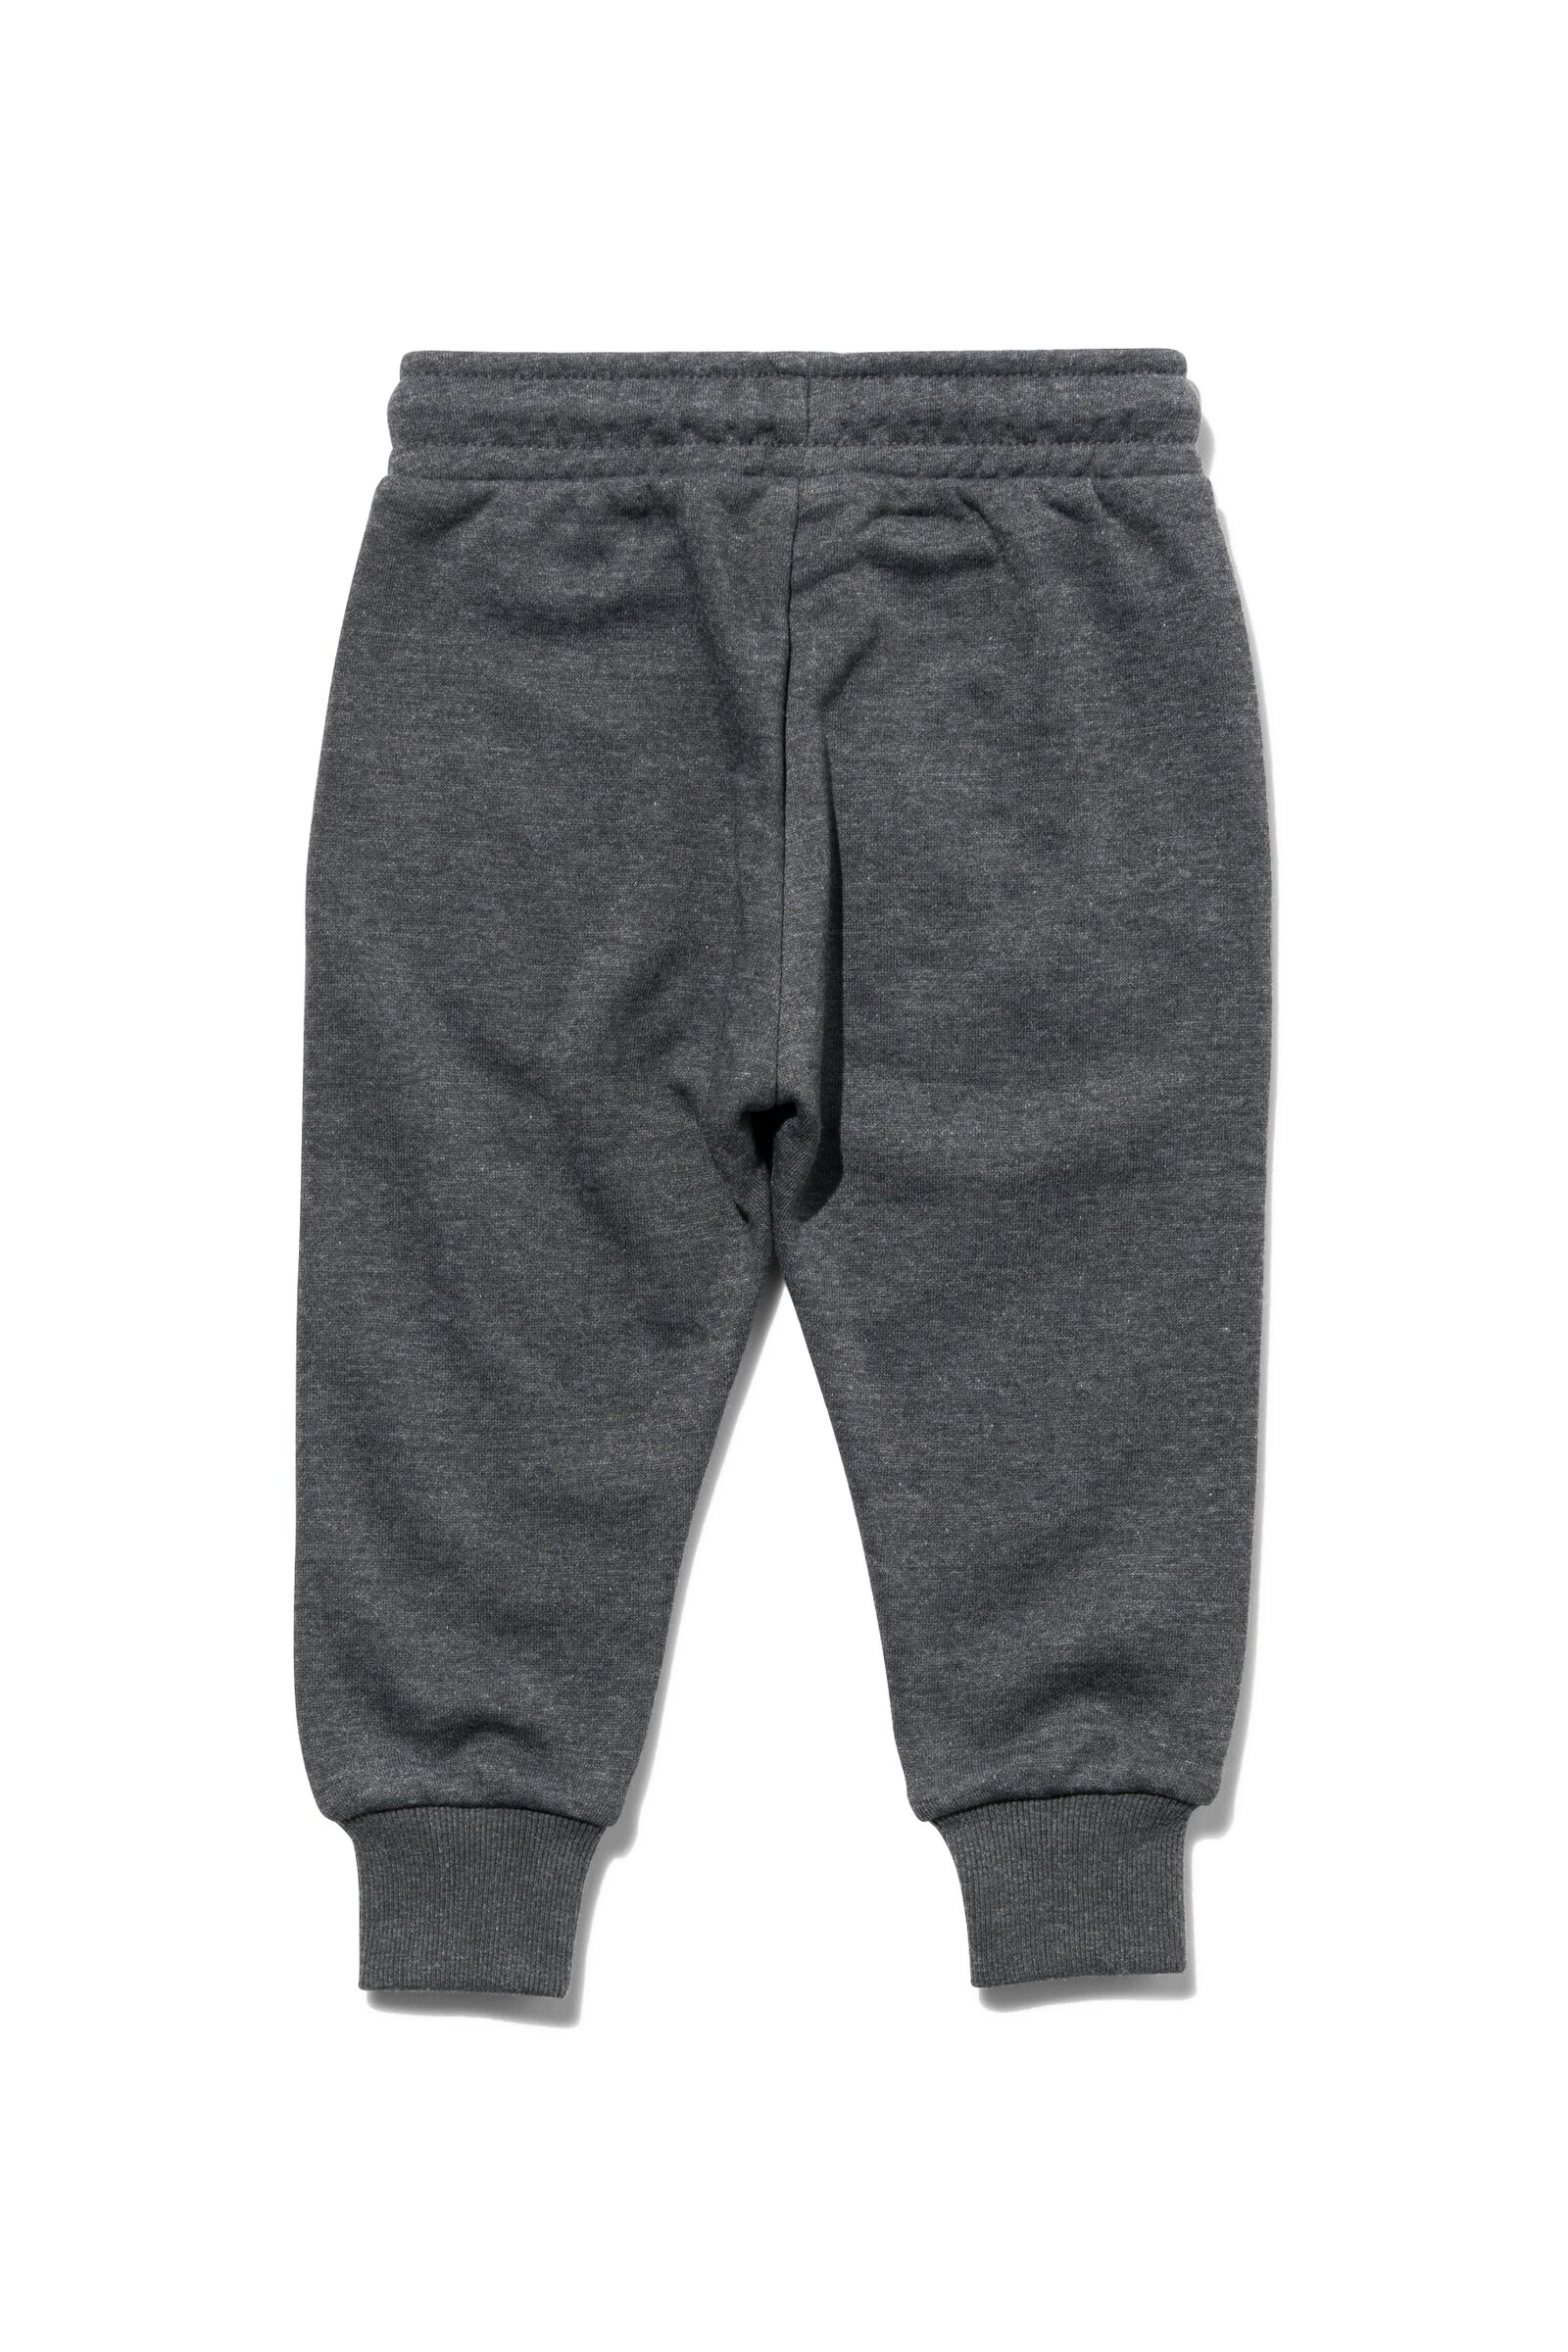 pantalon sweat bébé gris foncé 74 - 33171045 - HEMA